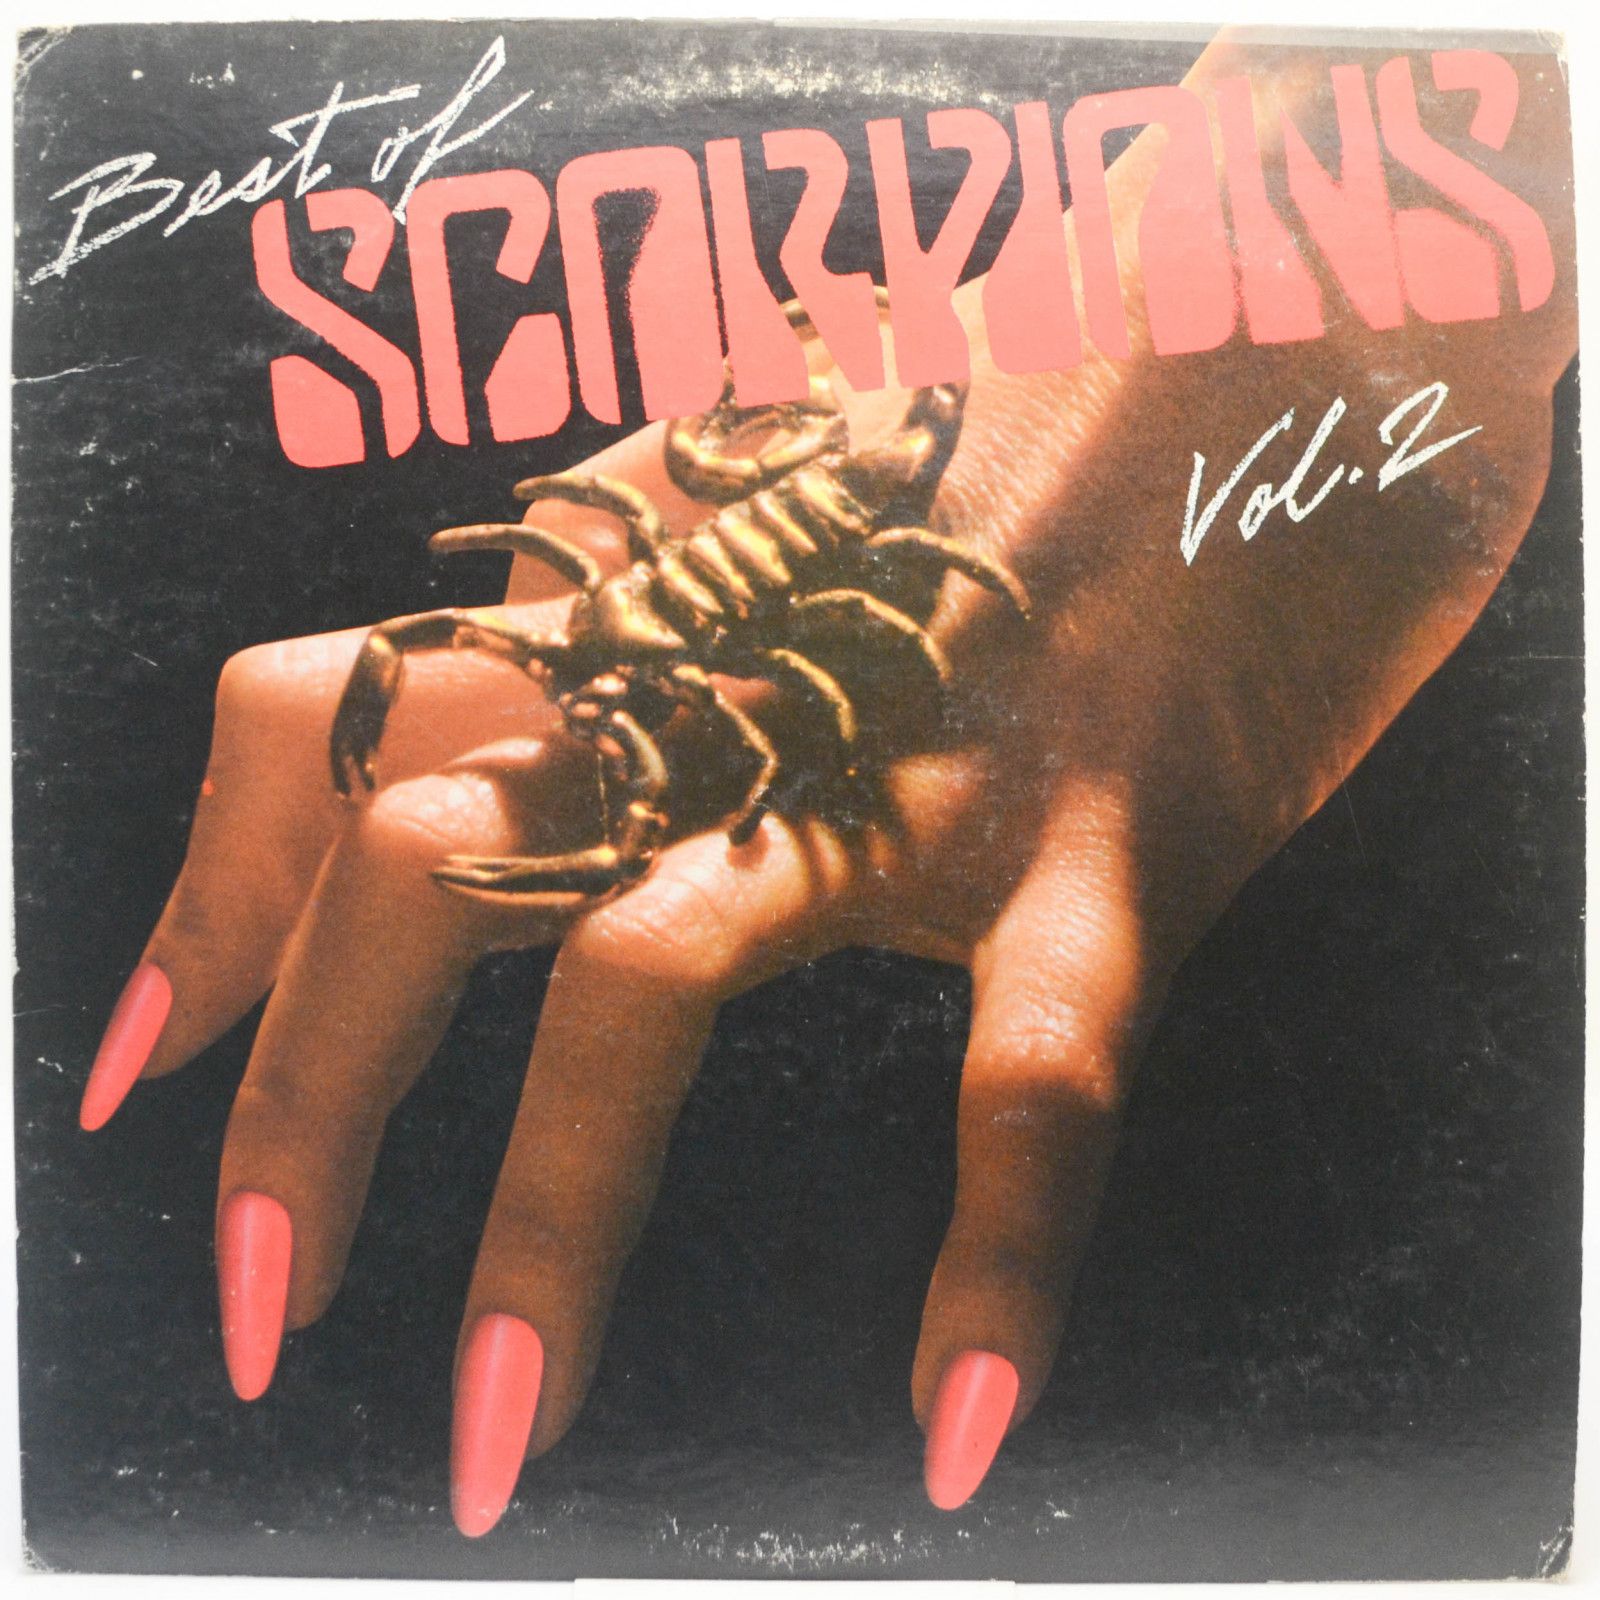 Scorpions — Best of Scorpions, Volume 2 (USA), 1984